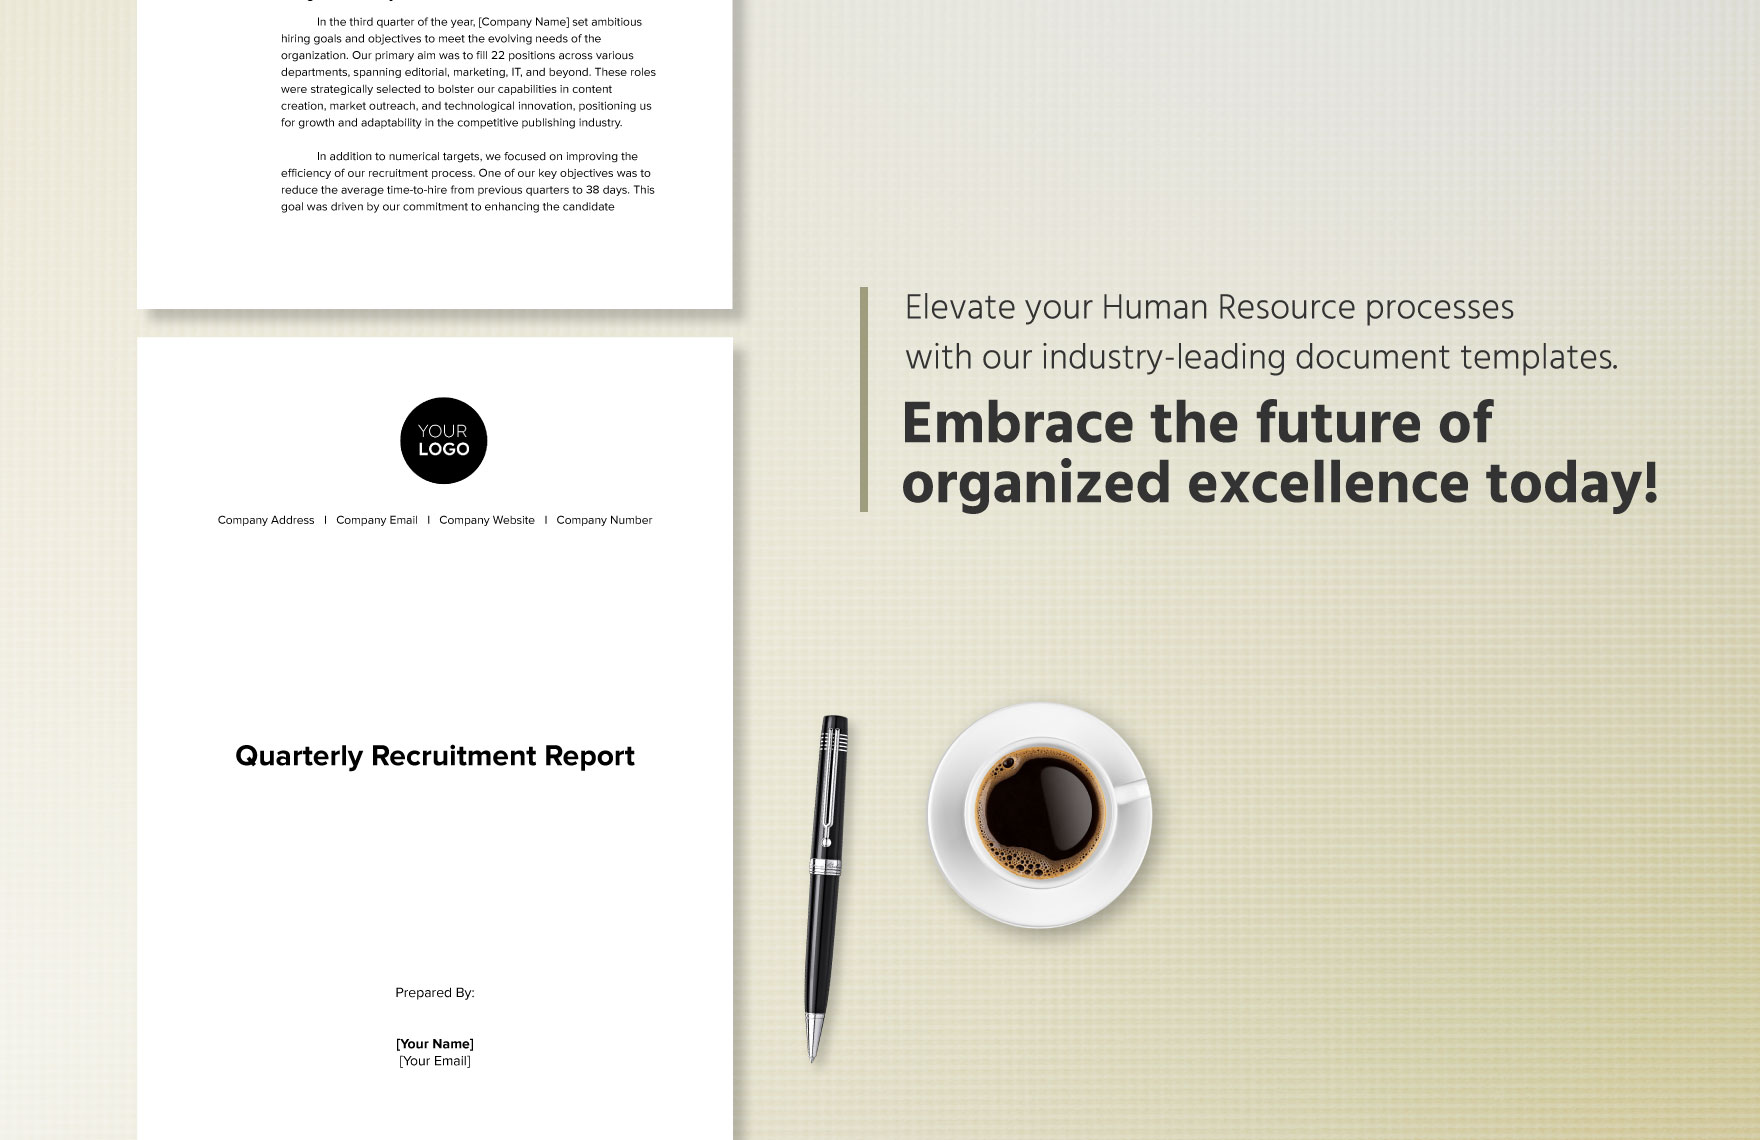 Quarterly Recruitment Report HR Template